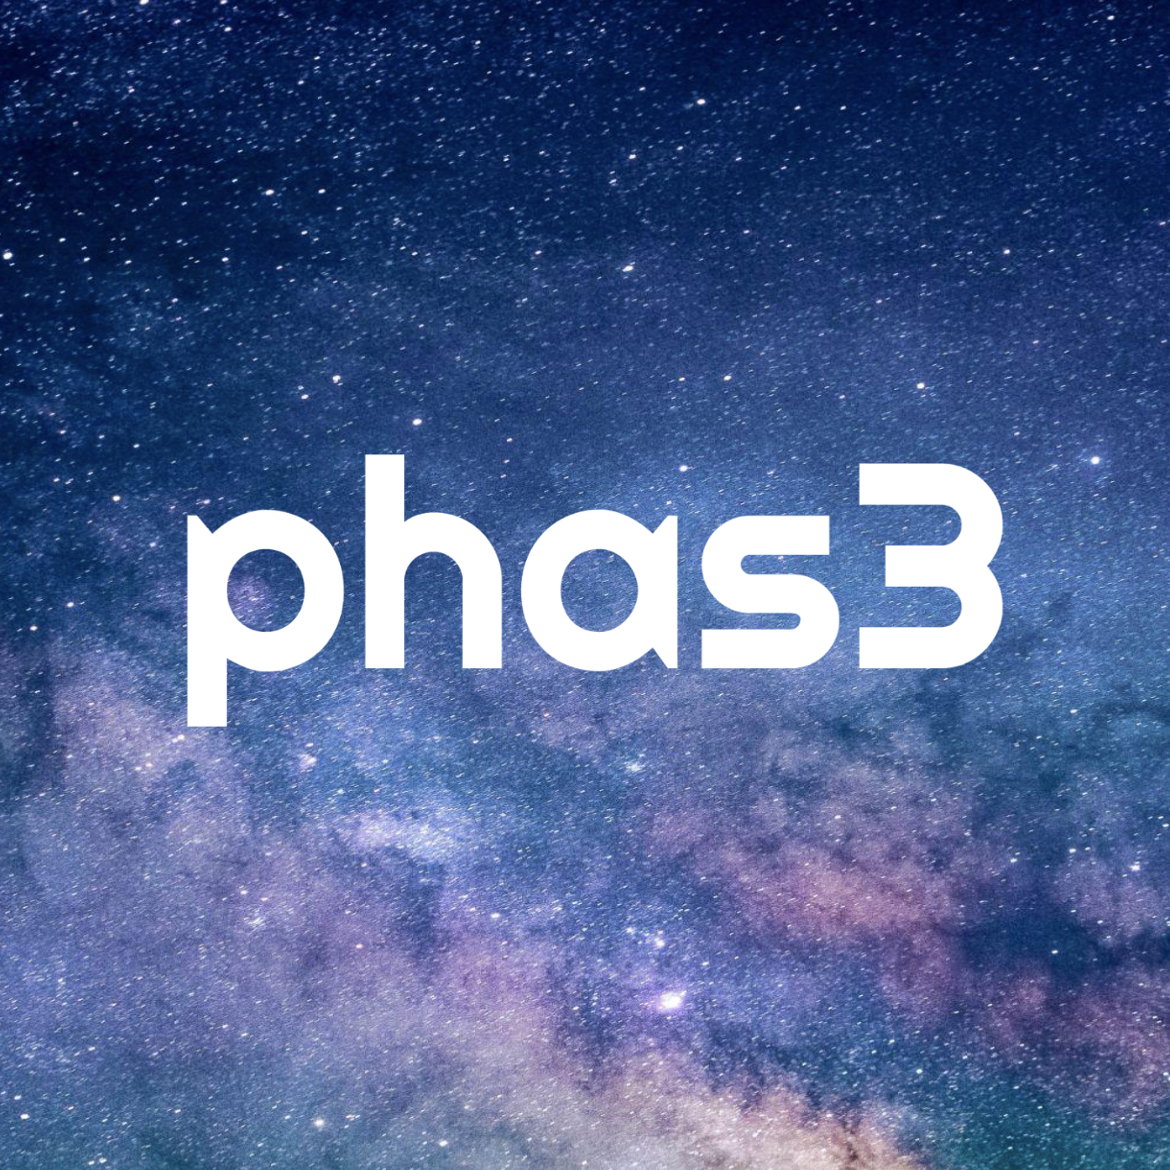 phas3